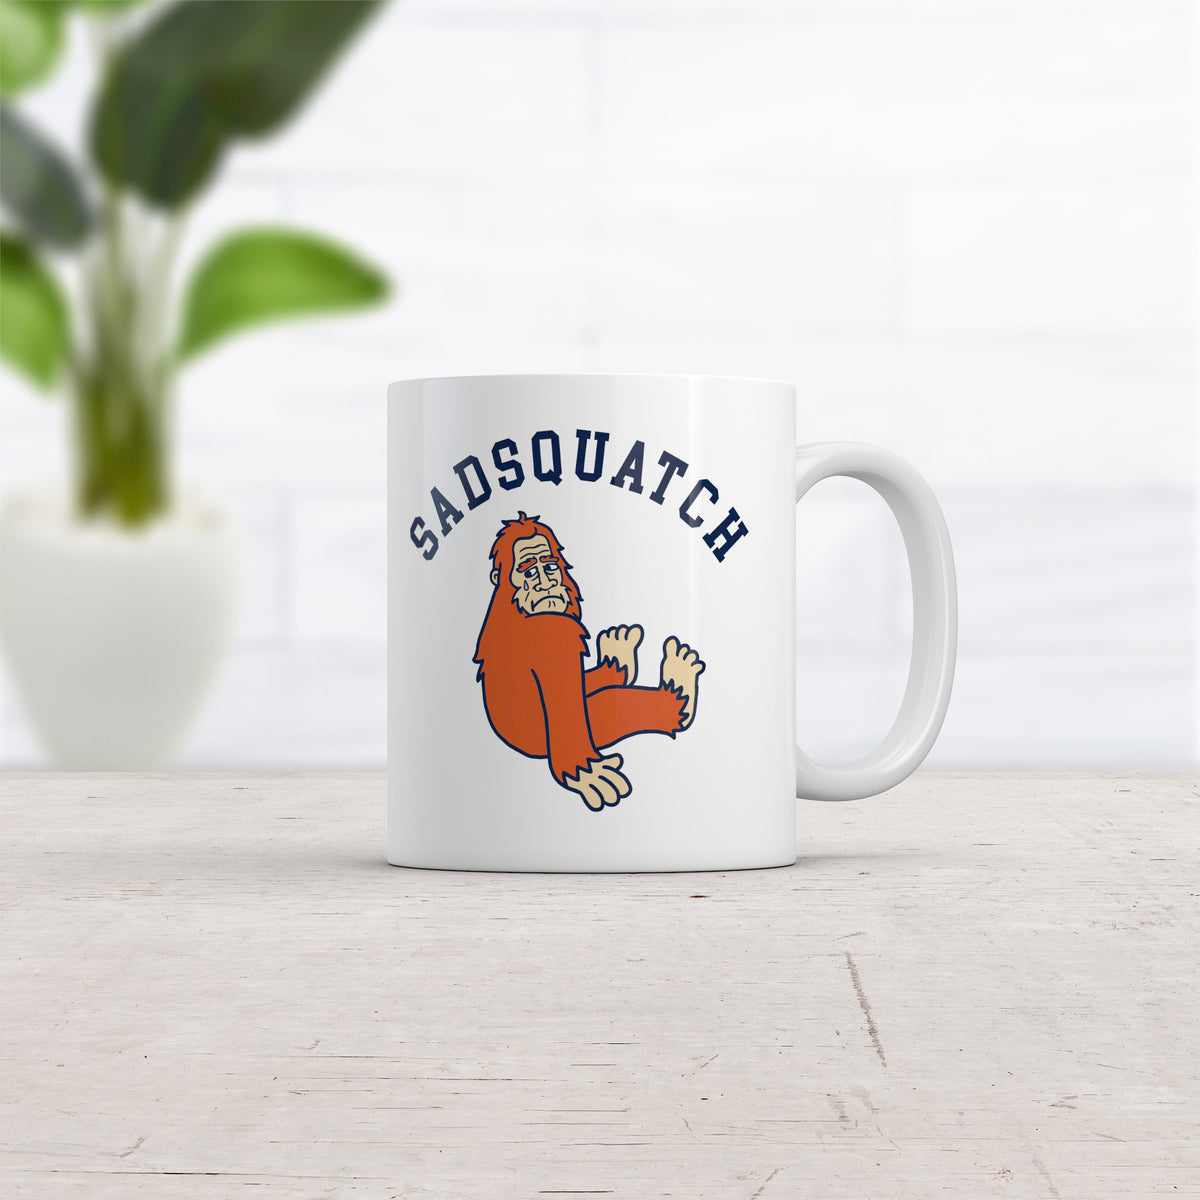 Sadsquatch Mug